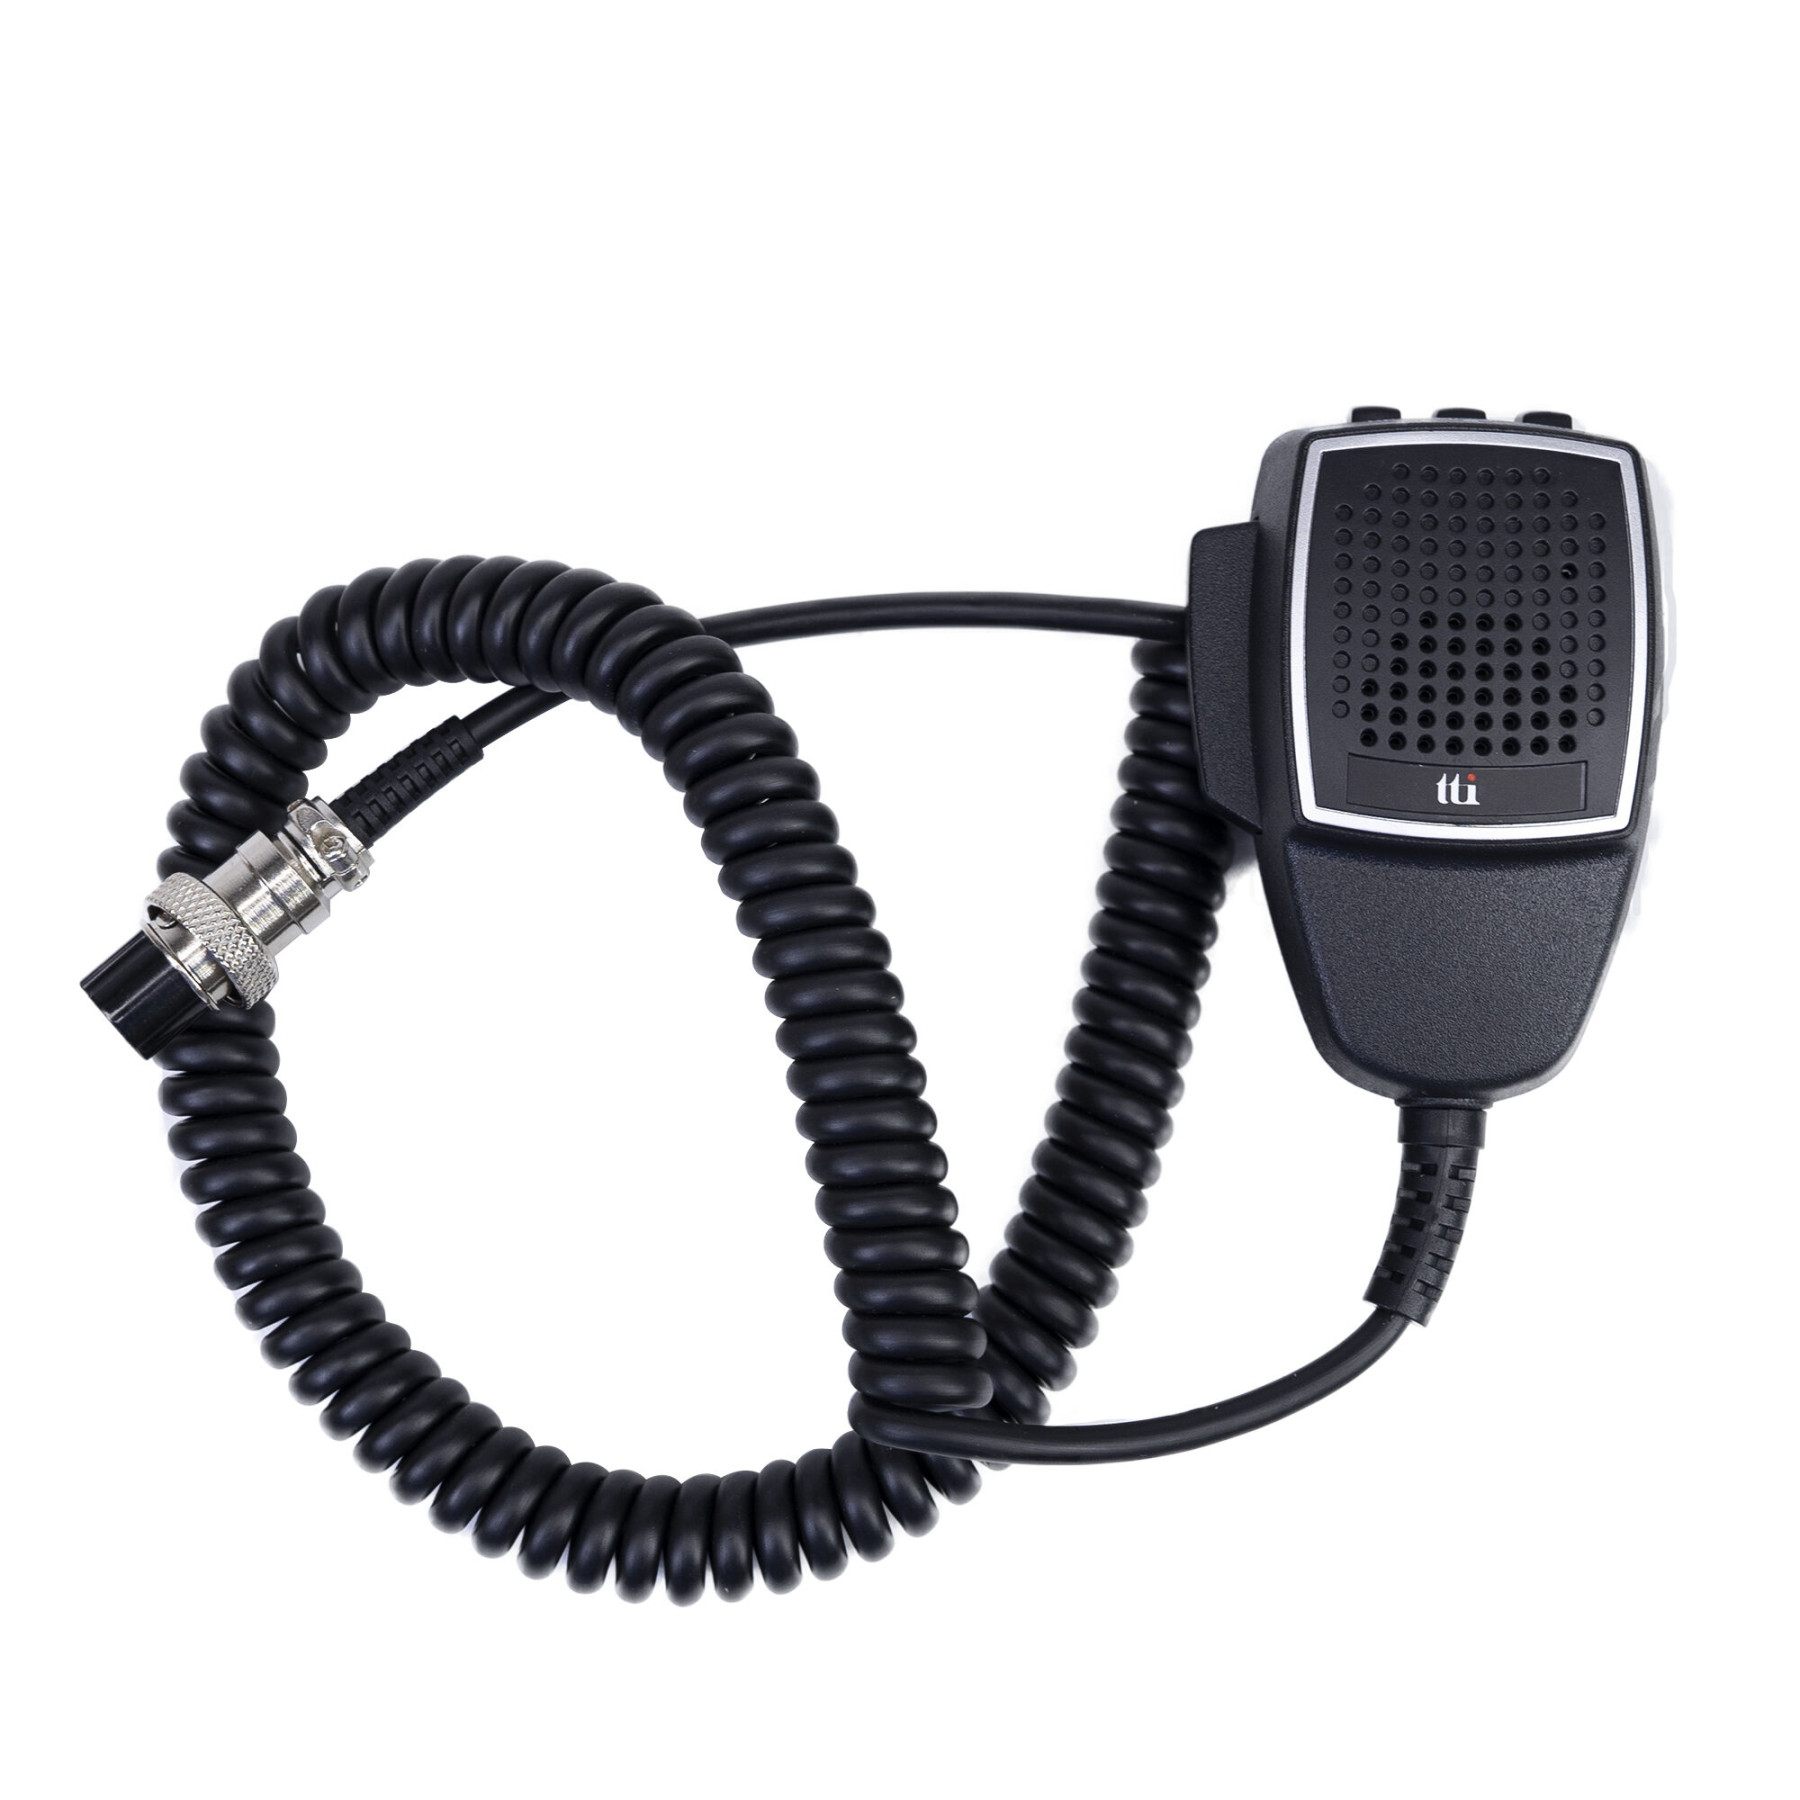 Microfoon voor 27 MC TTI 900 / 950